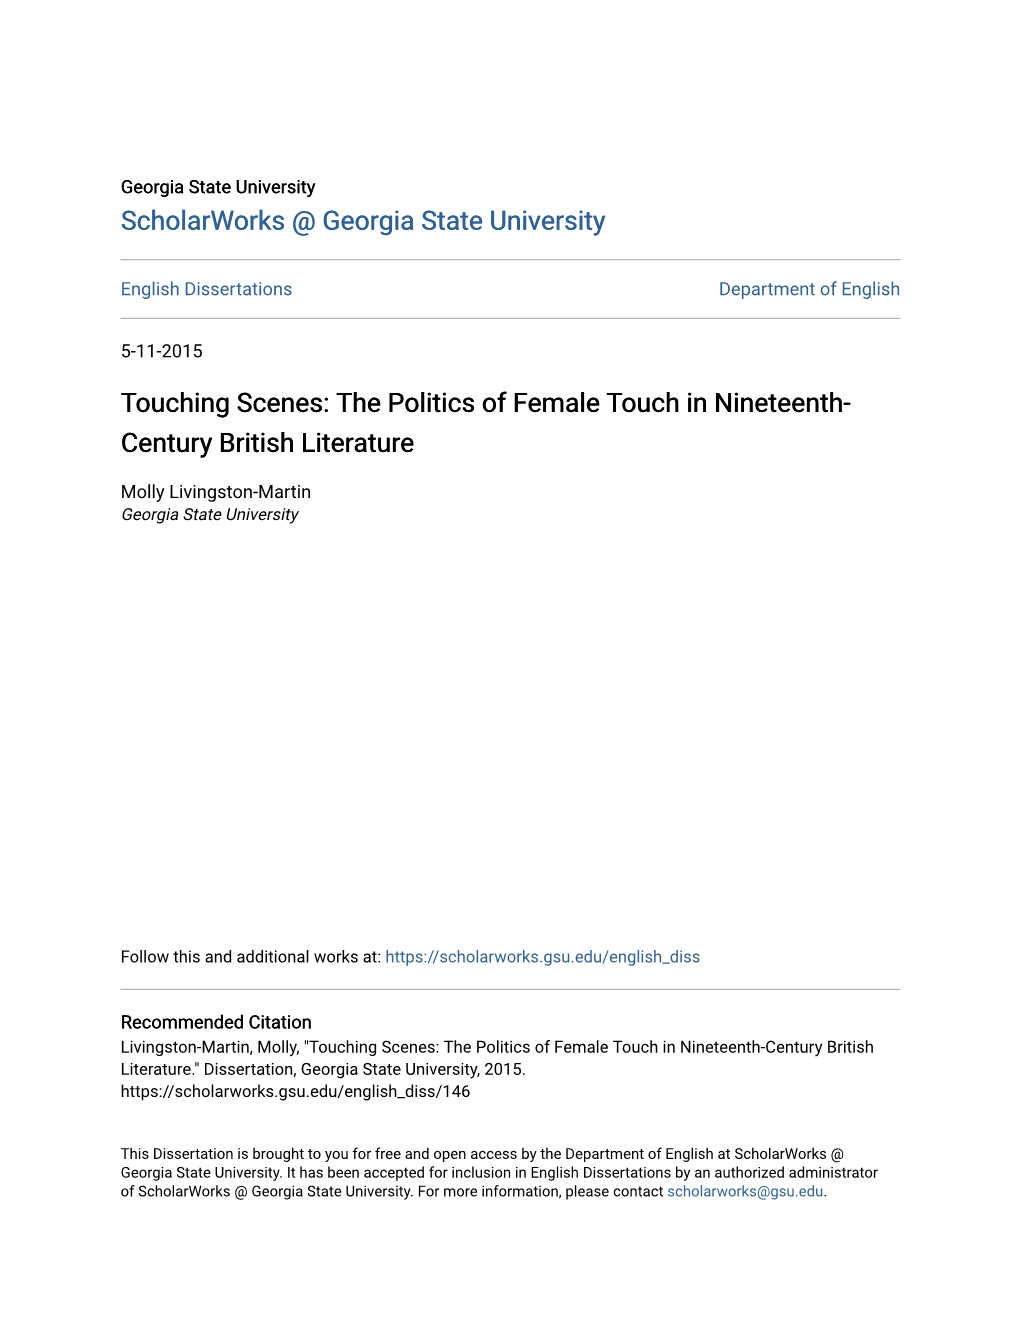 The Politics of Female Touch in Nineteenth-Century British Literature." Dissertation, Georgia State University, 2015